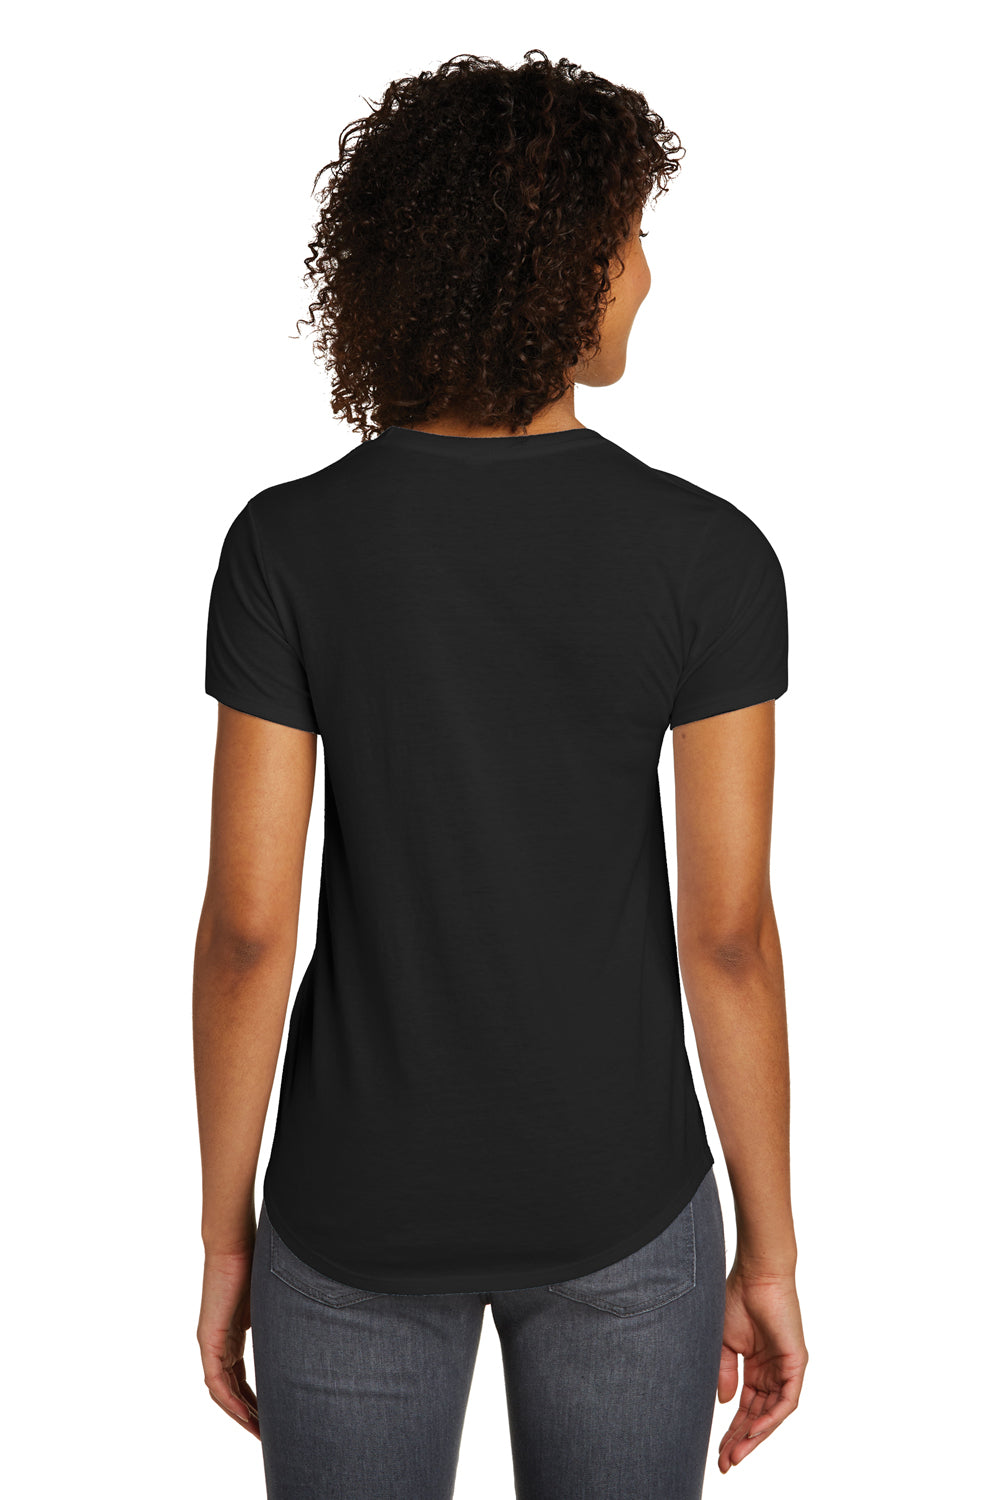 District DT6401 Womens Very Important Short Sleeve Crewneck T-Shirt Black Back